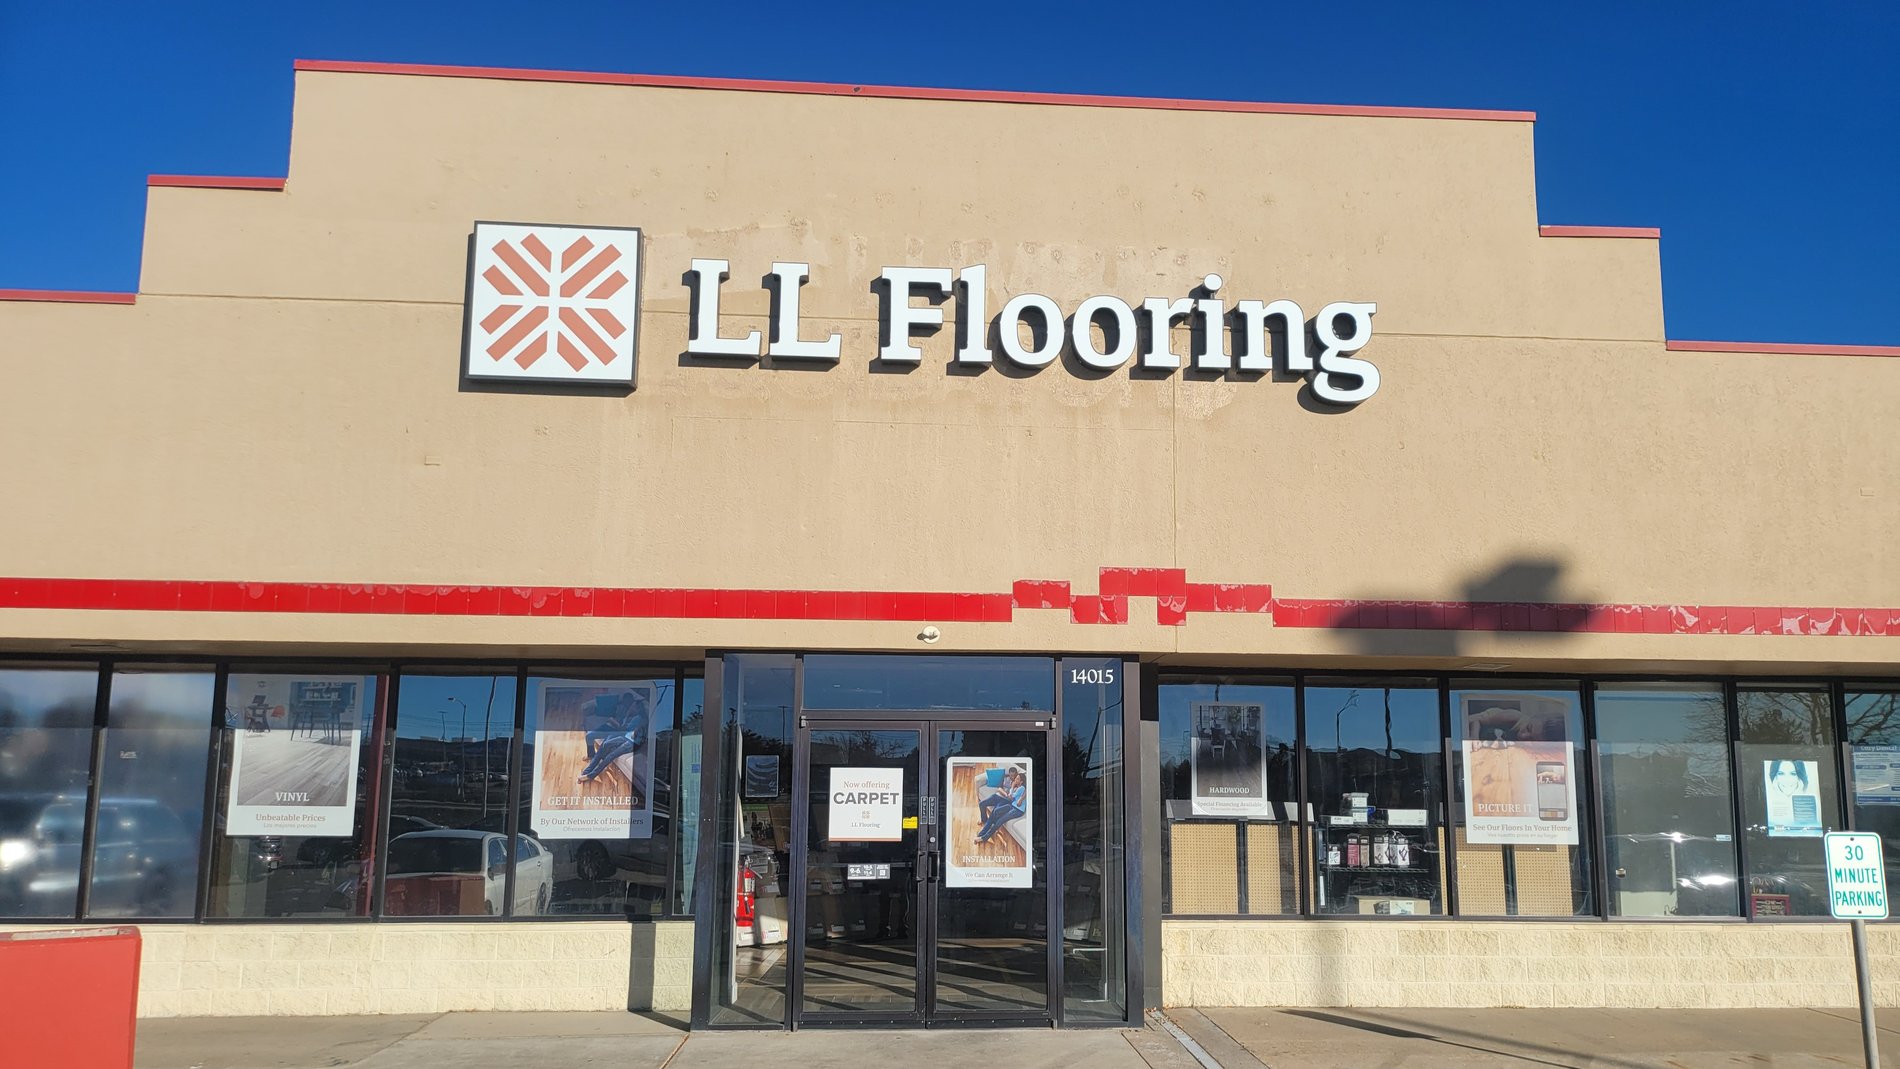 LL Flooring #1362 Aurora | 14015 E. Exposition Avenue | Storefront